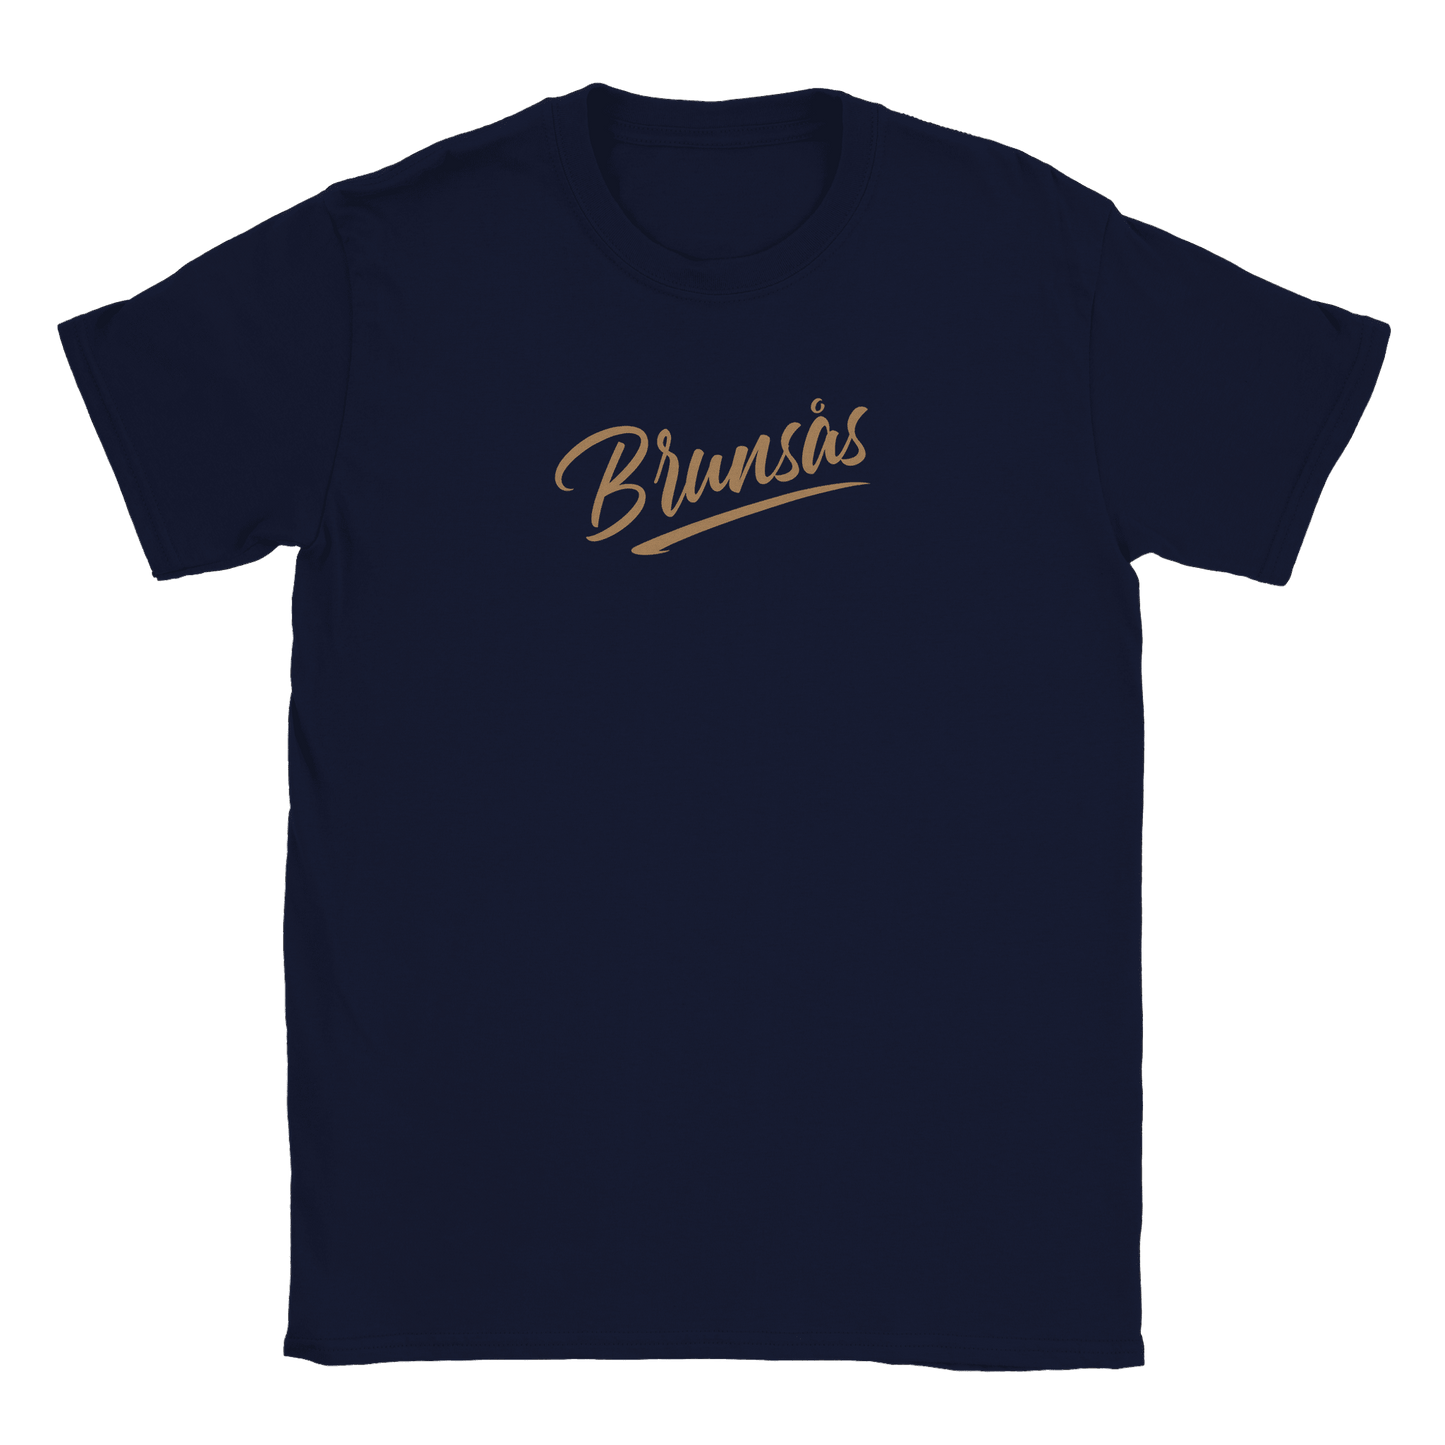 Brunsås - T-shirt Navy